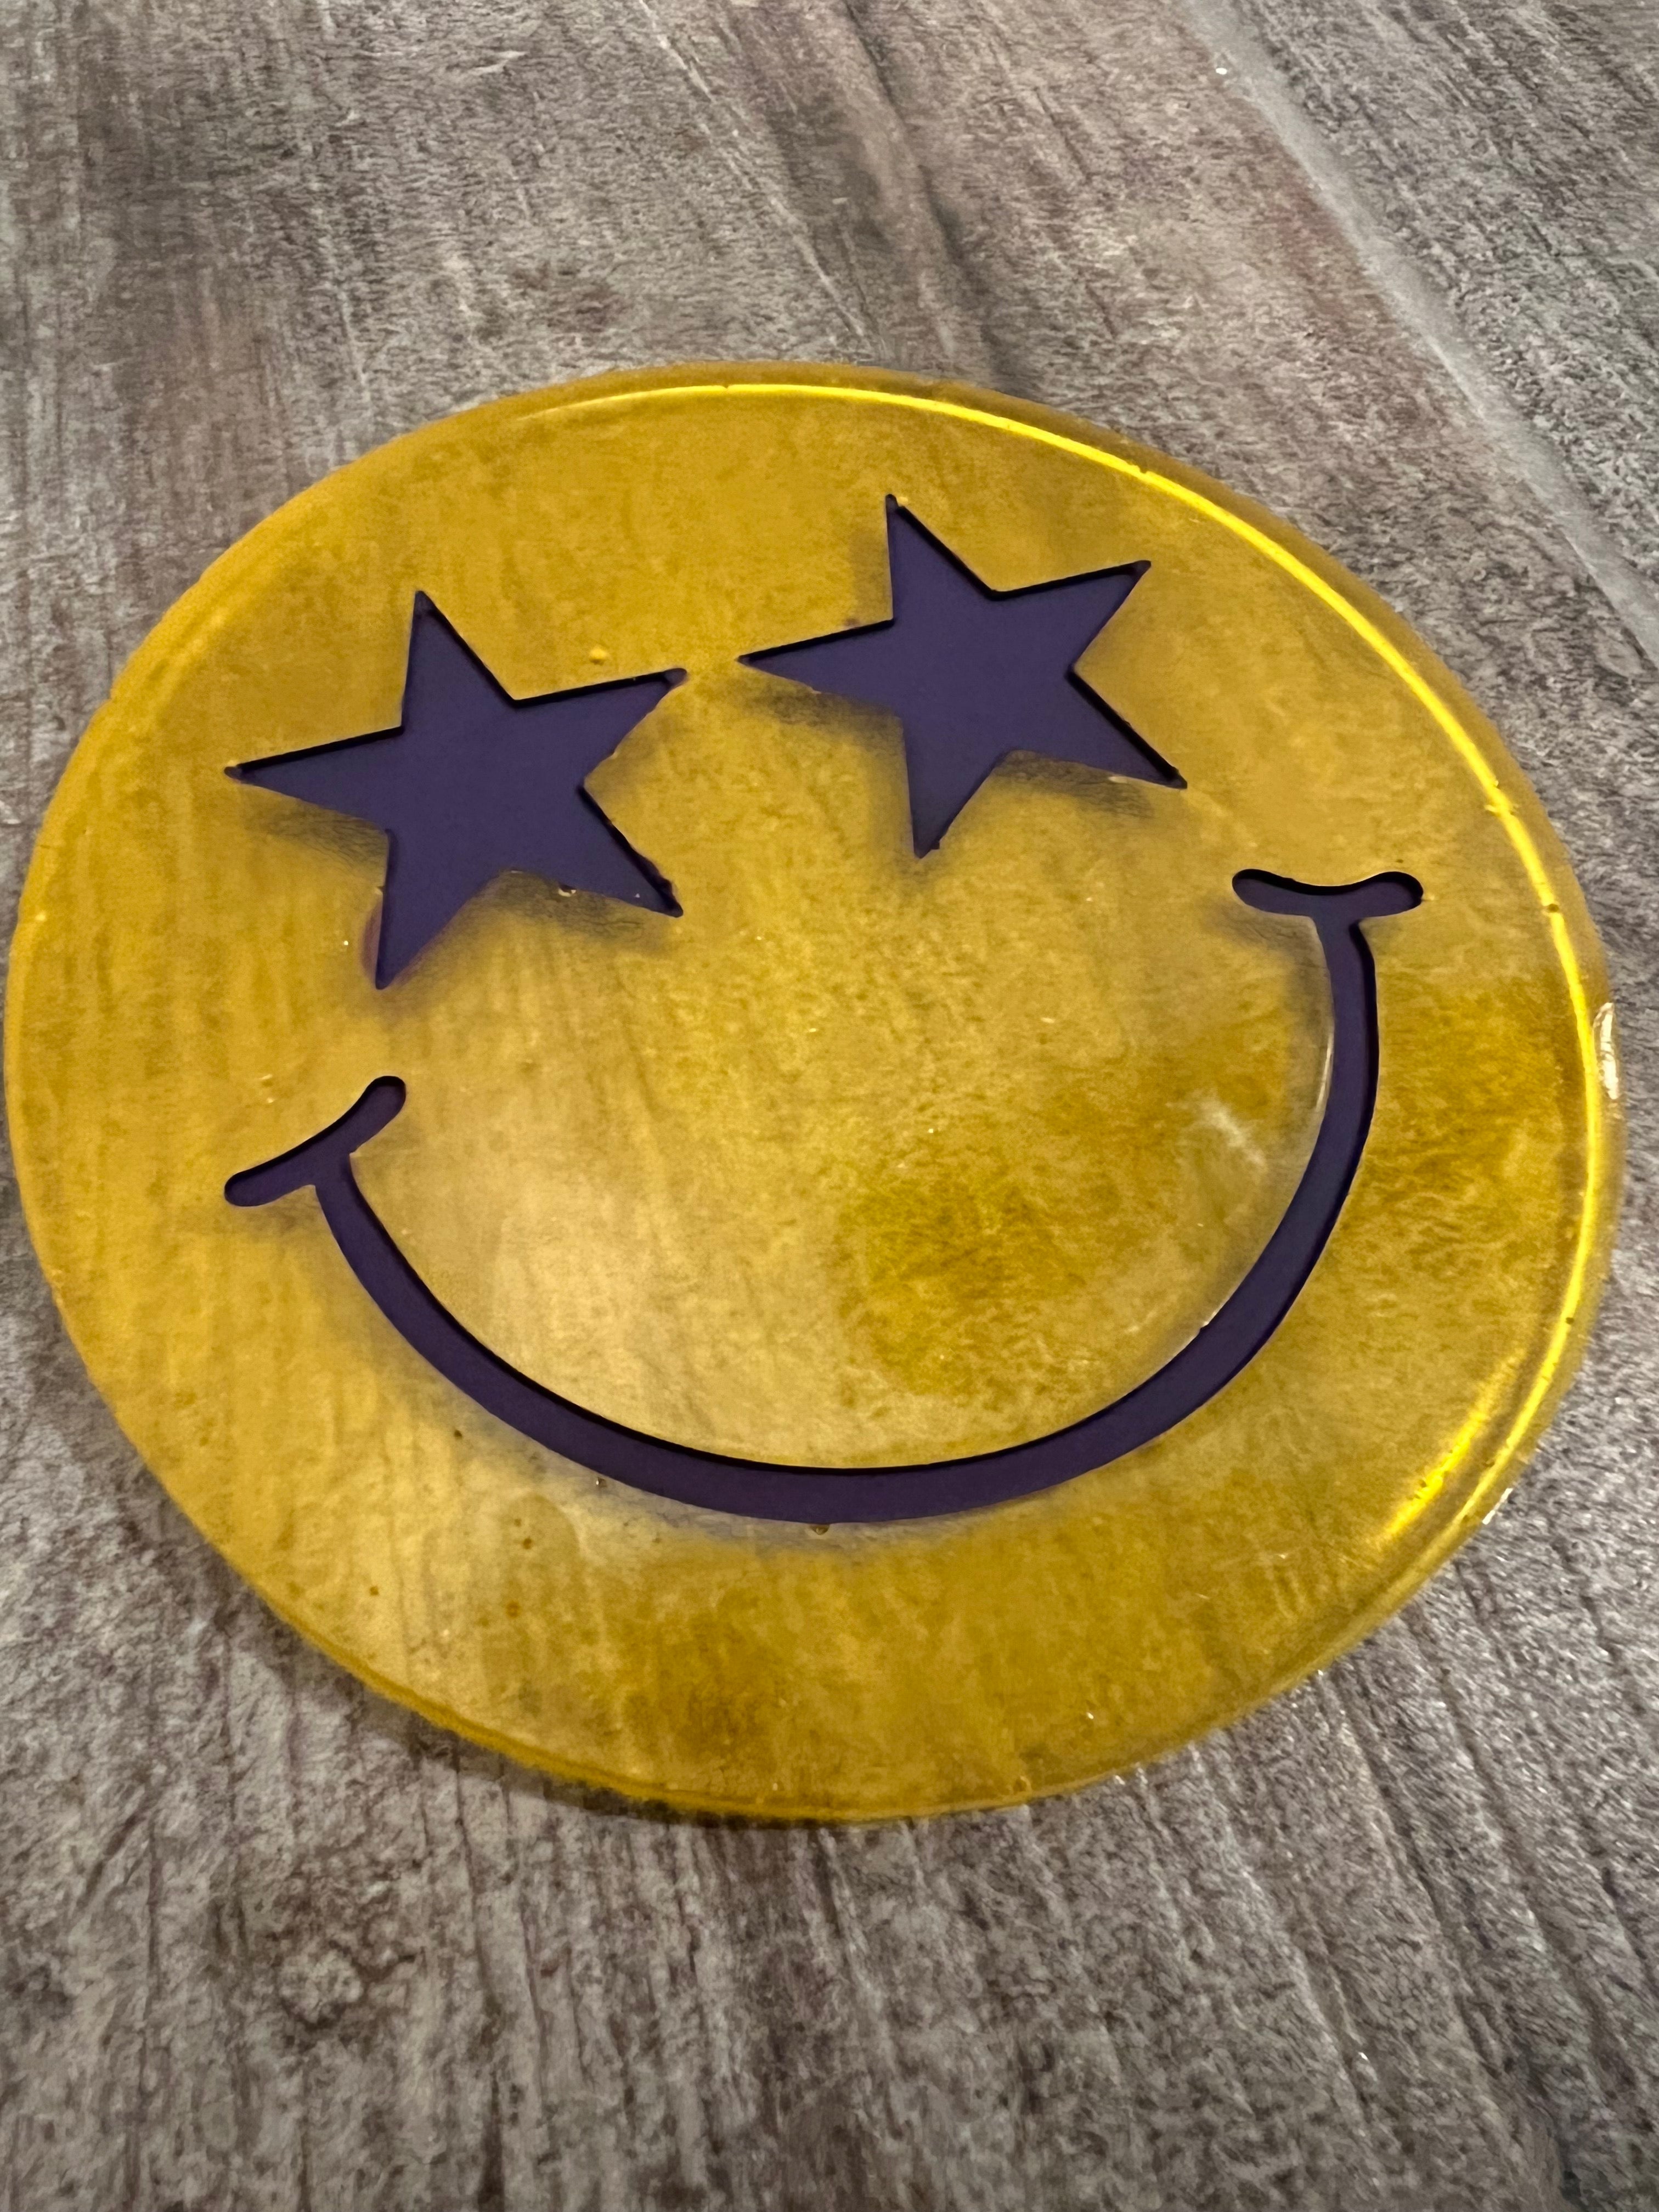 Star Struck Eyes Smiley Face Silicone Resin Coaster Mold Set